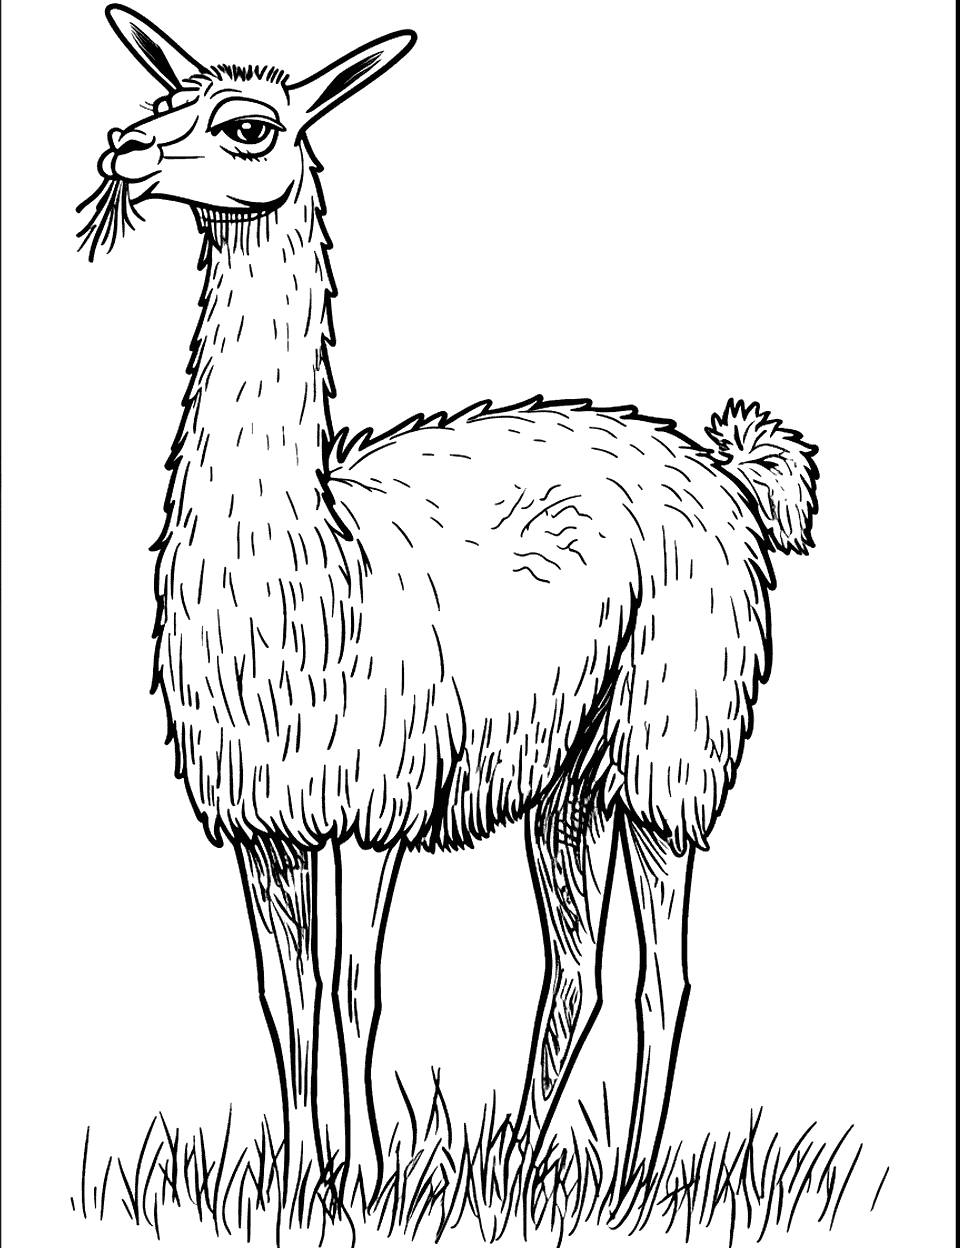 Llama Eating Grass Coloring Page - A llama contentedly munching on grass.